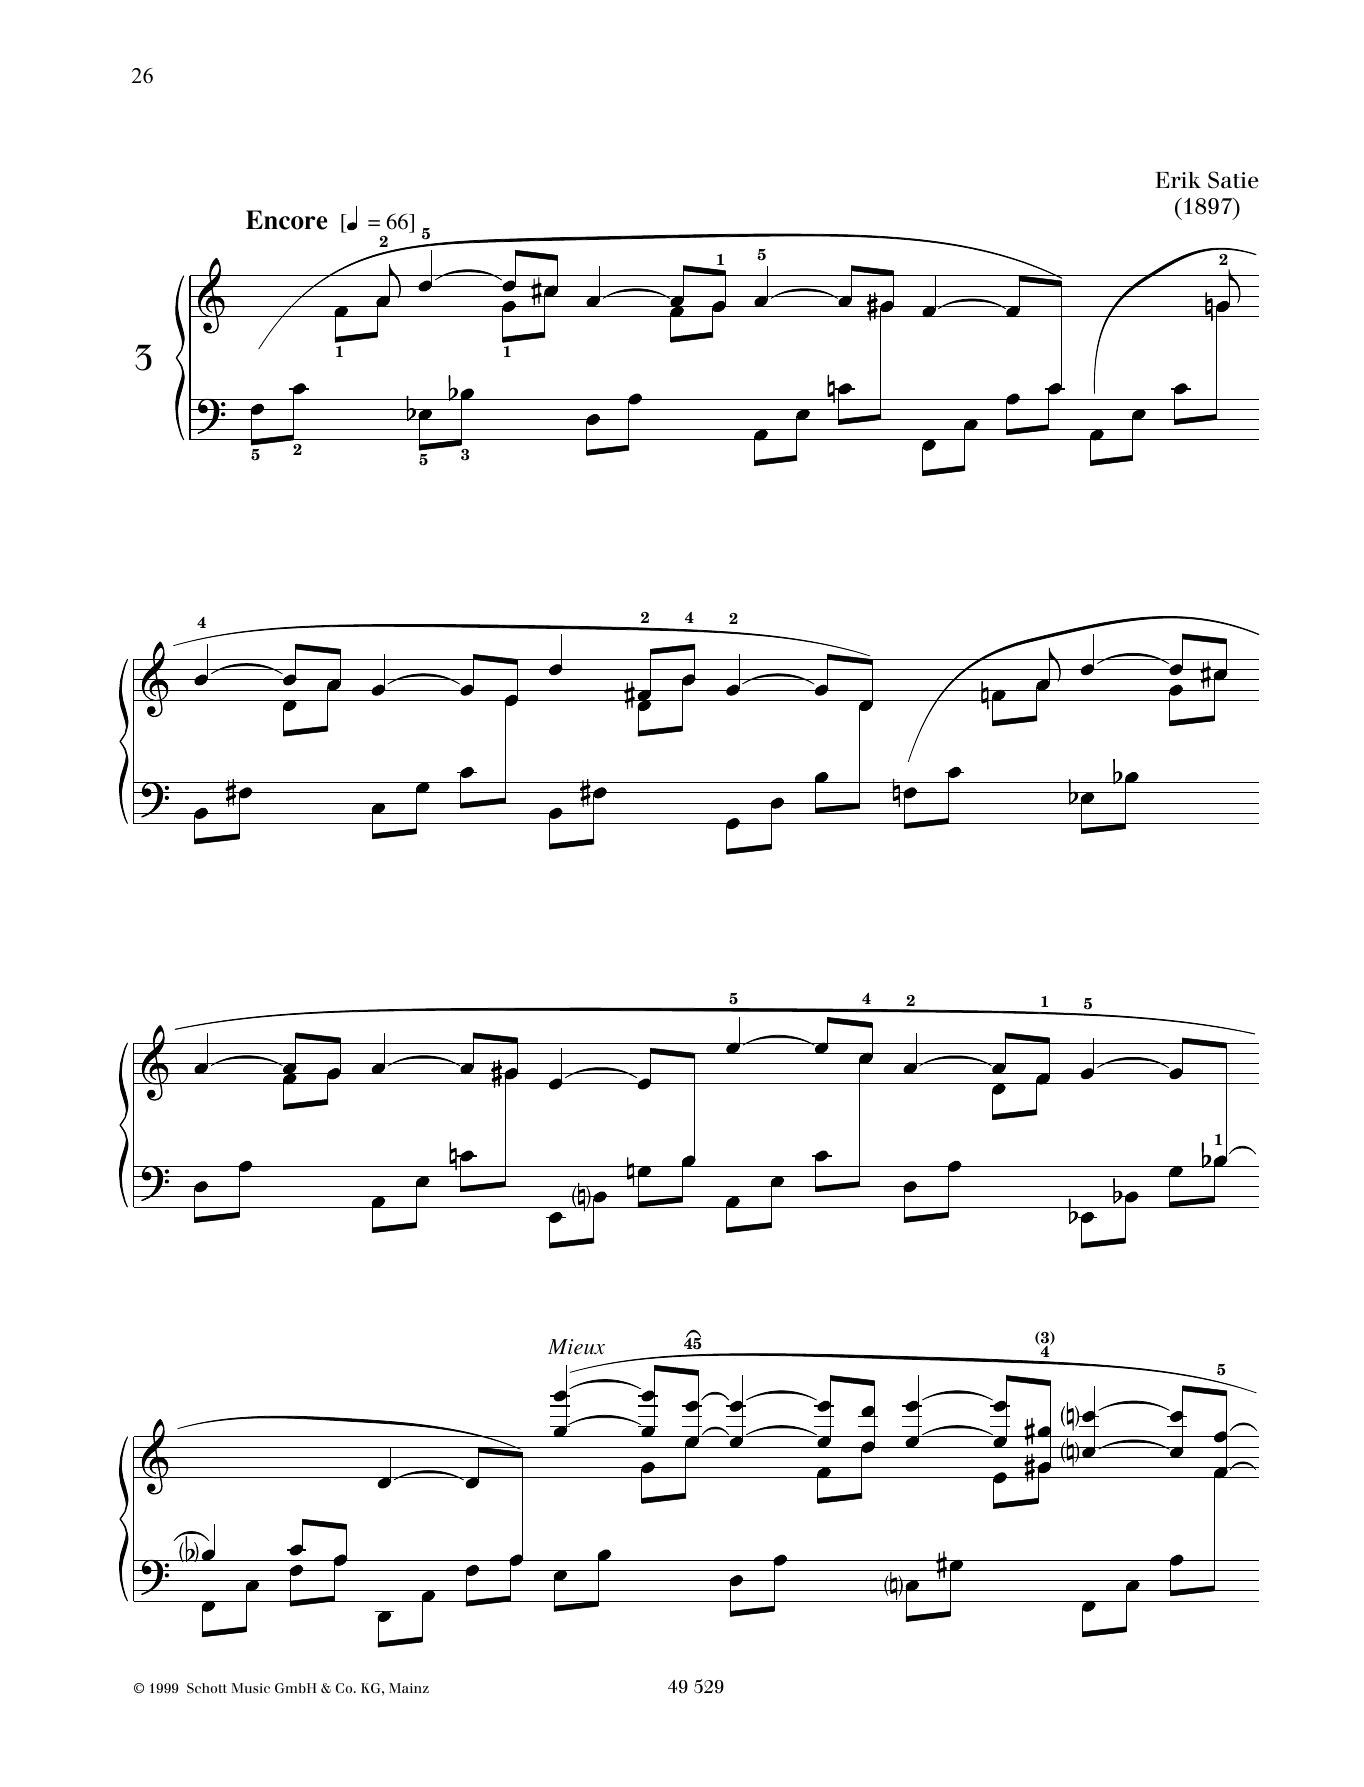 Erik Satie Danse de travers No. 3 Sheet Music Notes & Chords for Piano Solo - Download or Print PDF